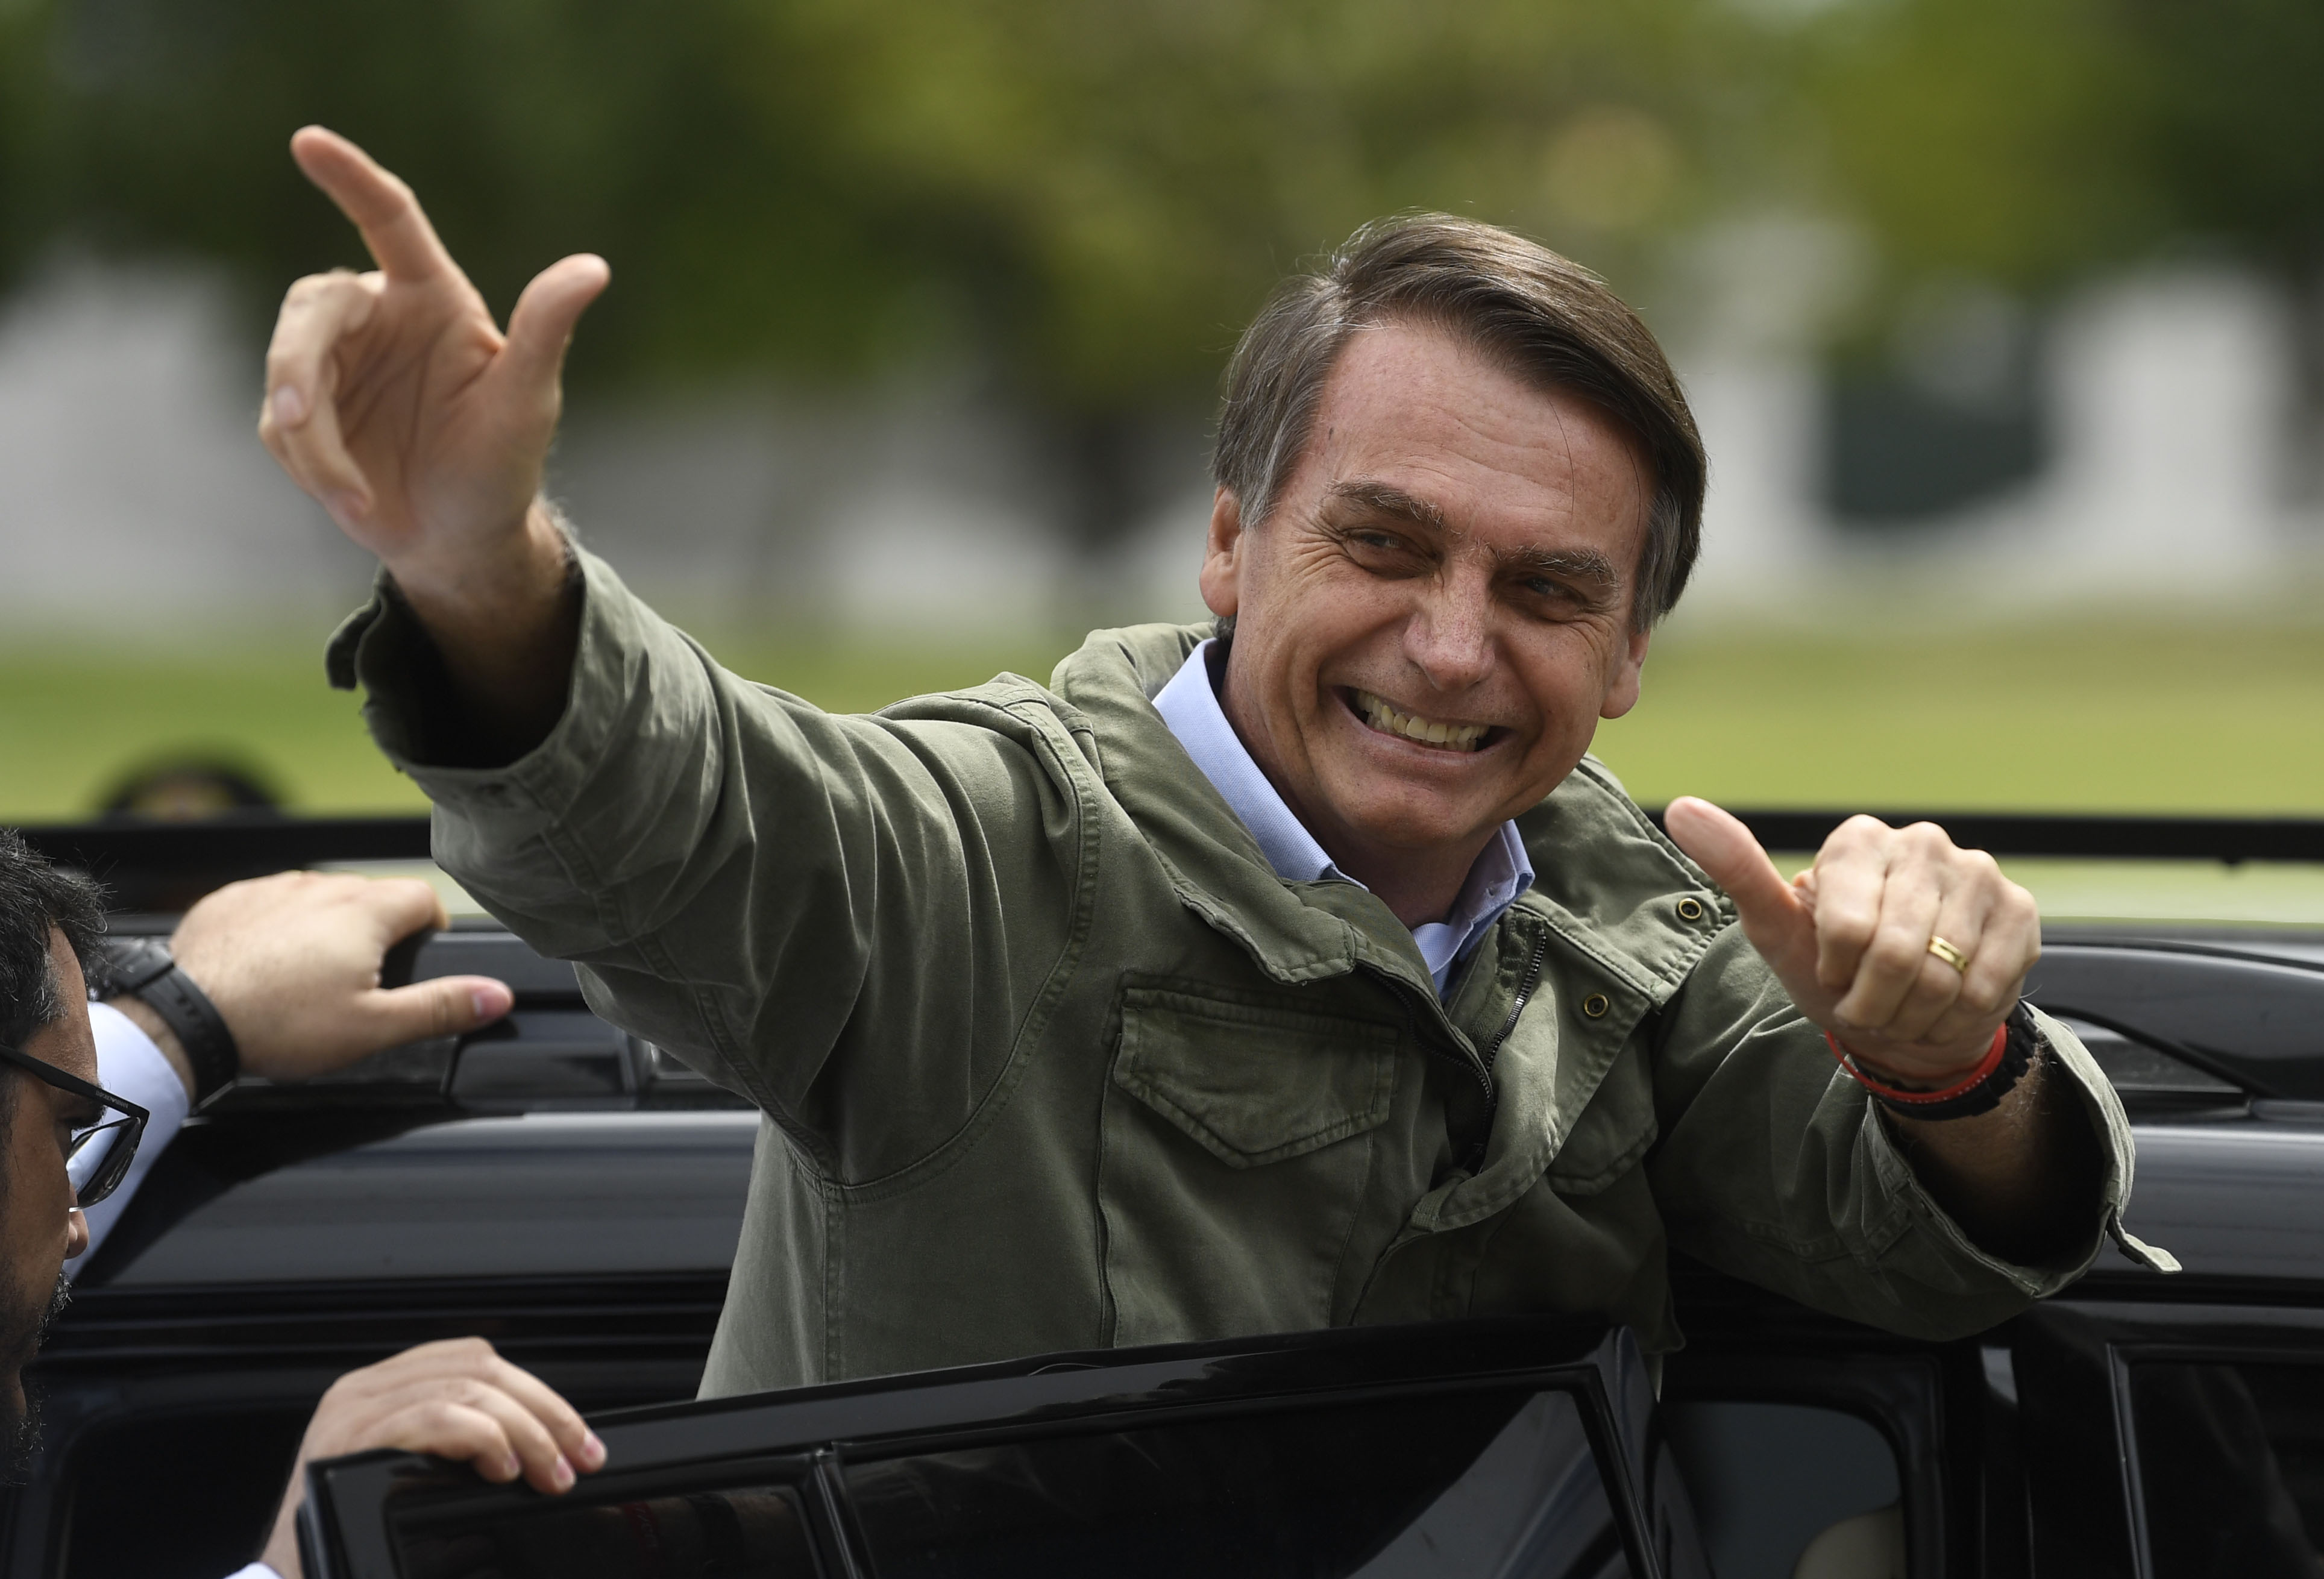 El primer viaje de Bolsonaro como presidente de Brasil será a Chile